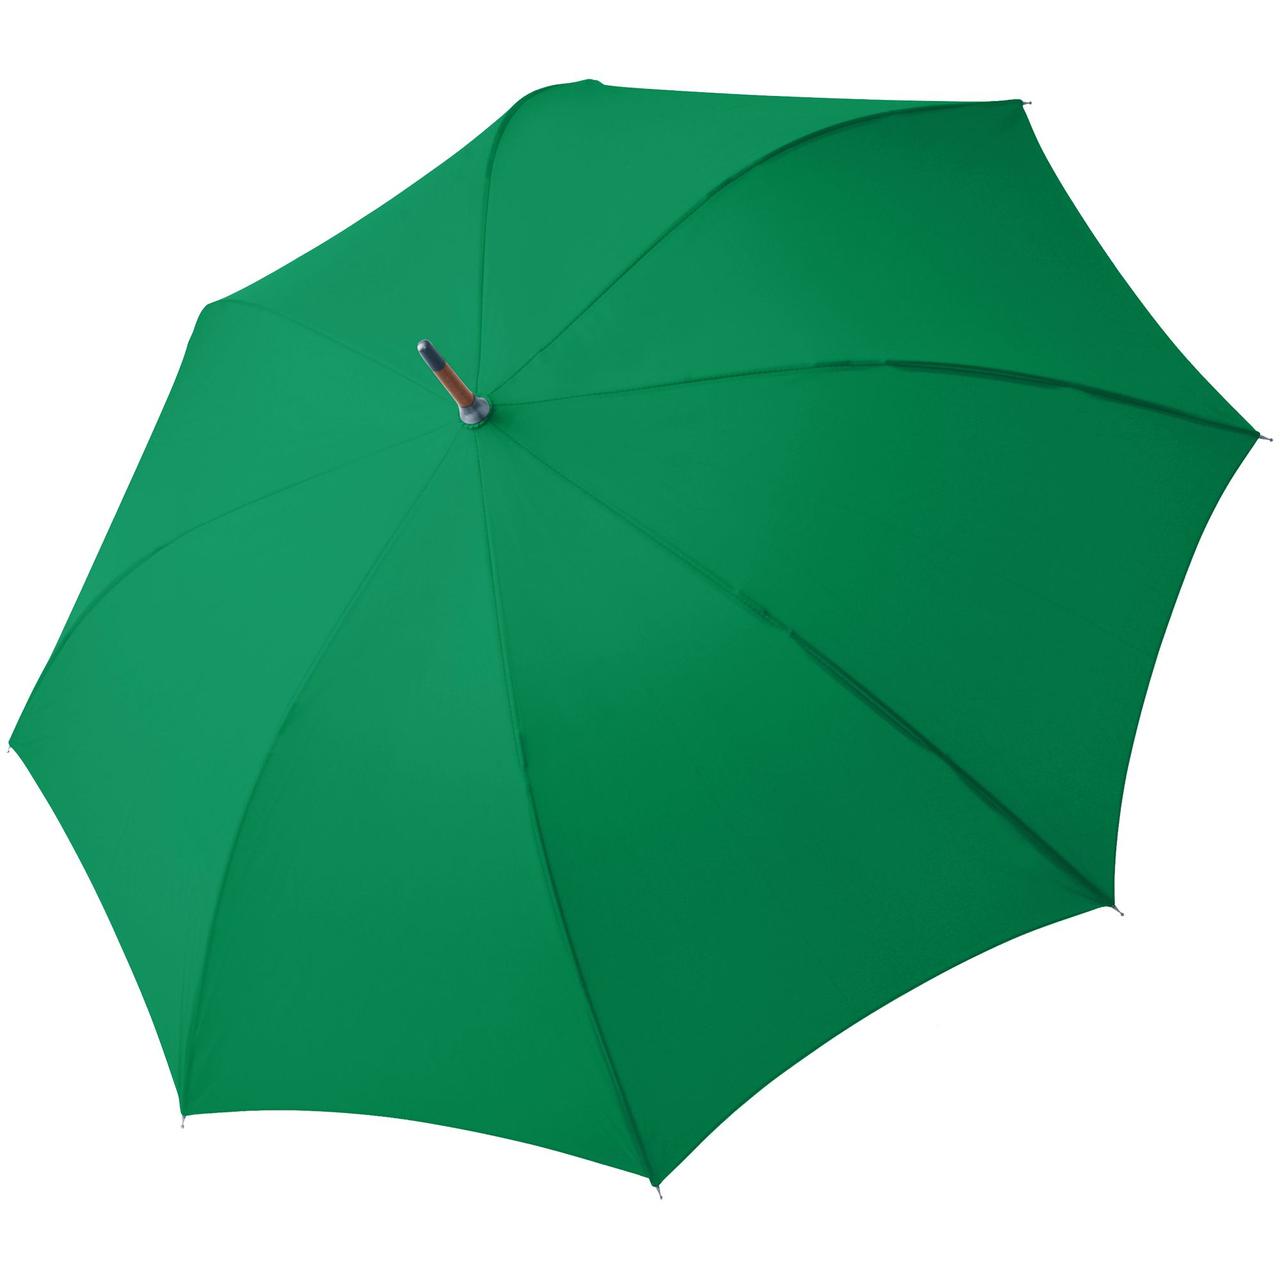 Зонт-трость Oslo AC, зеленый (артикул 11847.90), фото 1